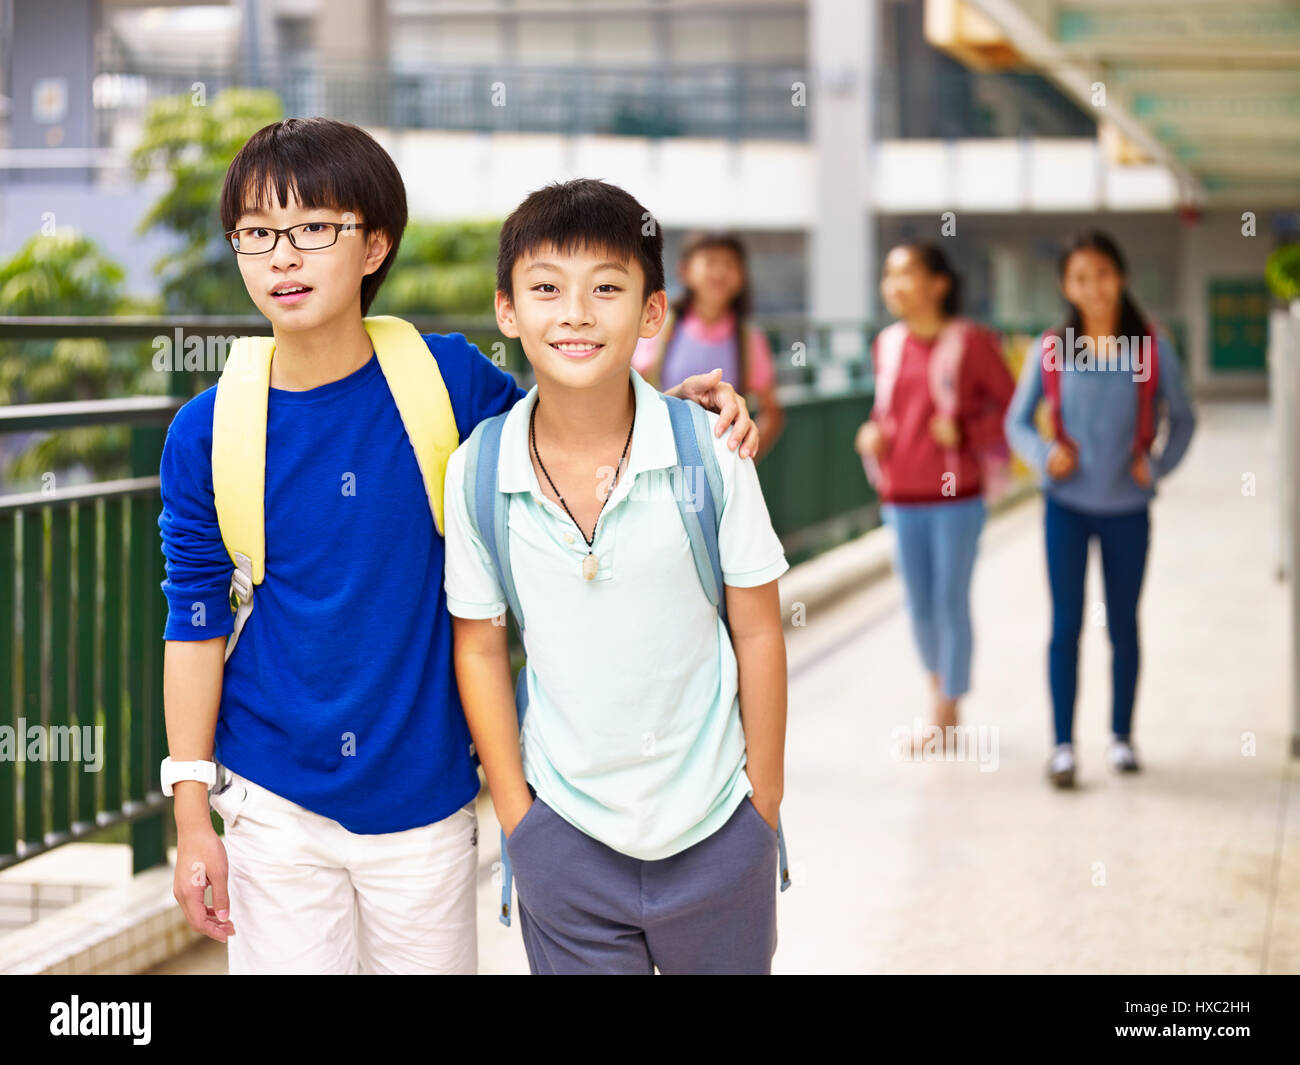 asian primary school students walking in hallway of classroom building. Stock Photo